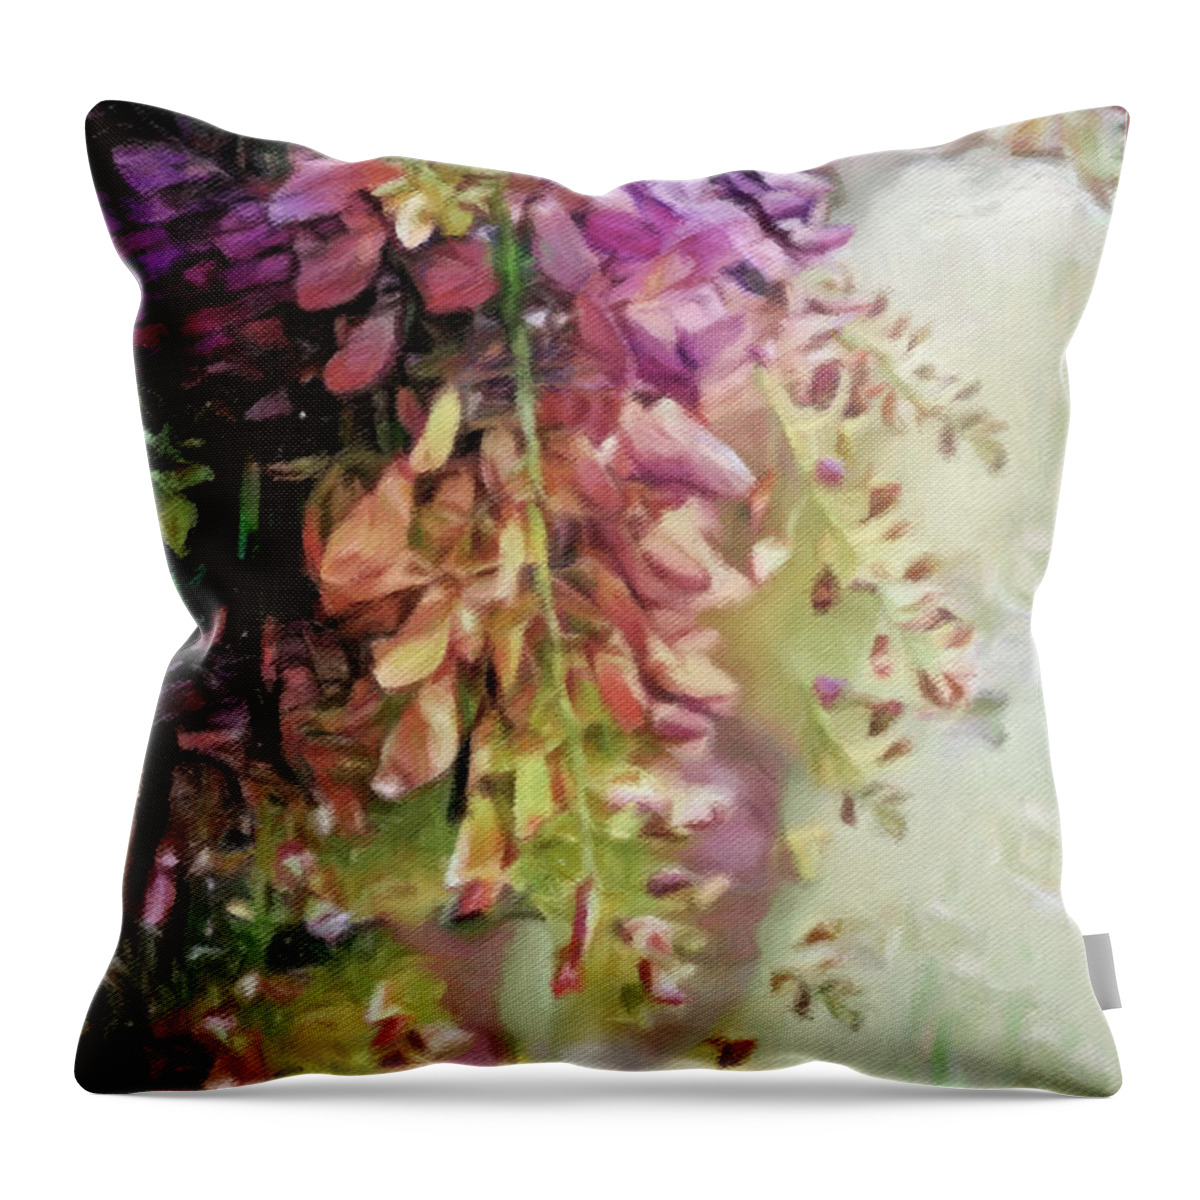 Spring Romance Throw Pillow featuring the digital art Spring Romance by Susan Maxwell Schmidt